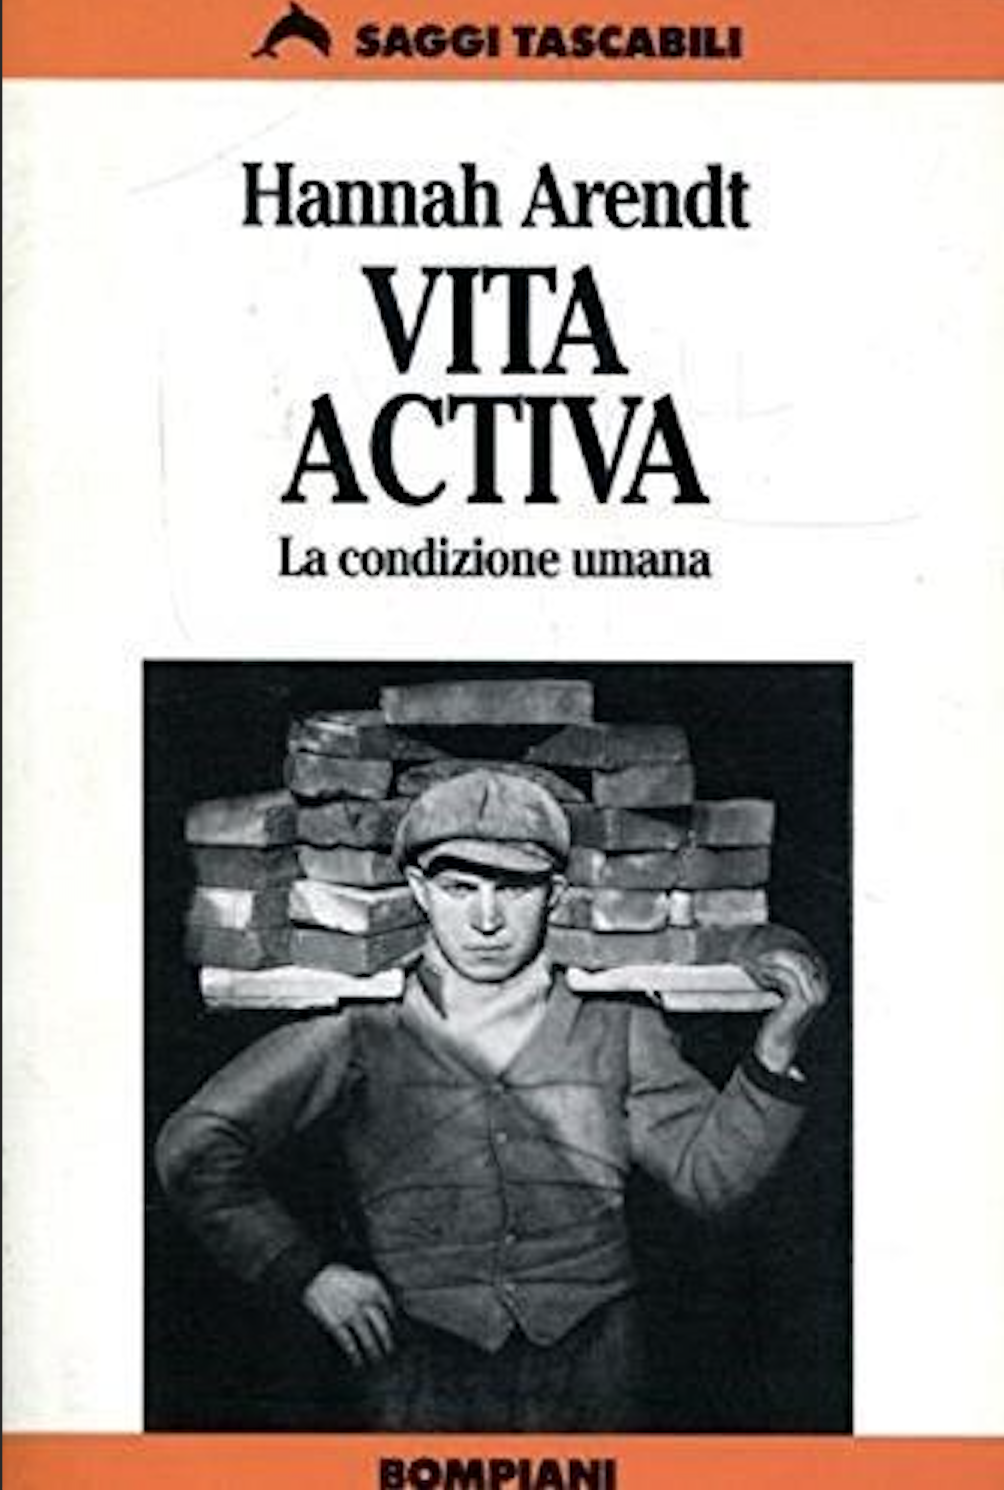 Hannah Arendt, Vita Activa, Bompiani, 1994